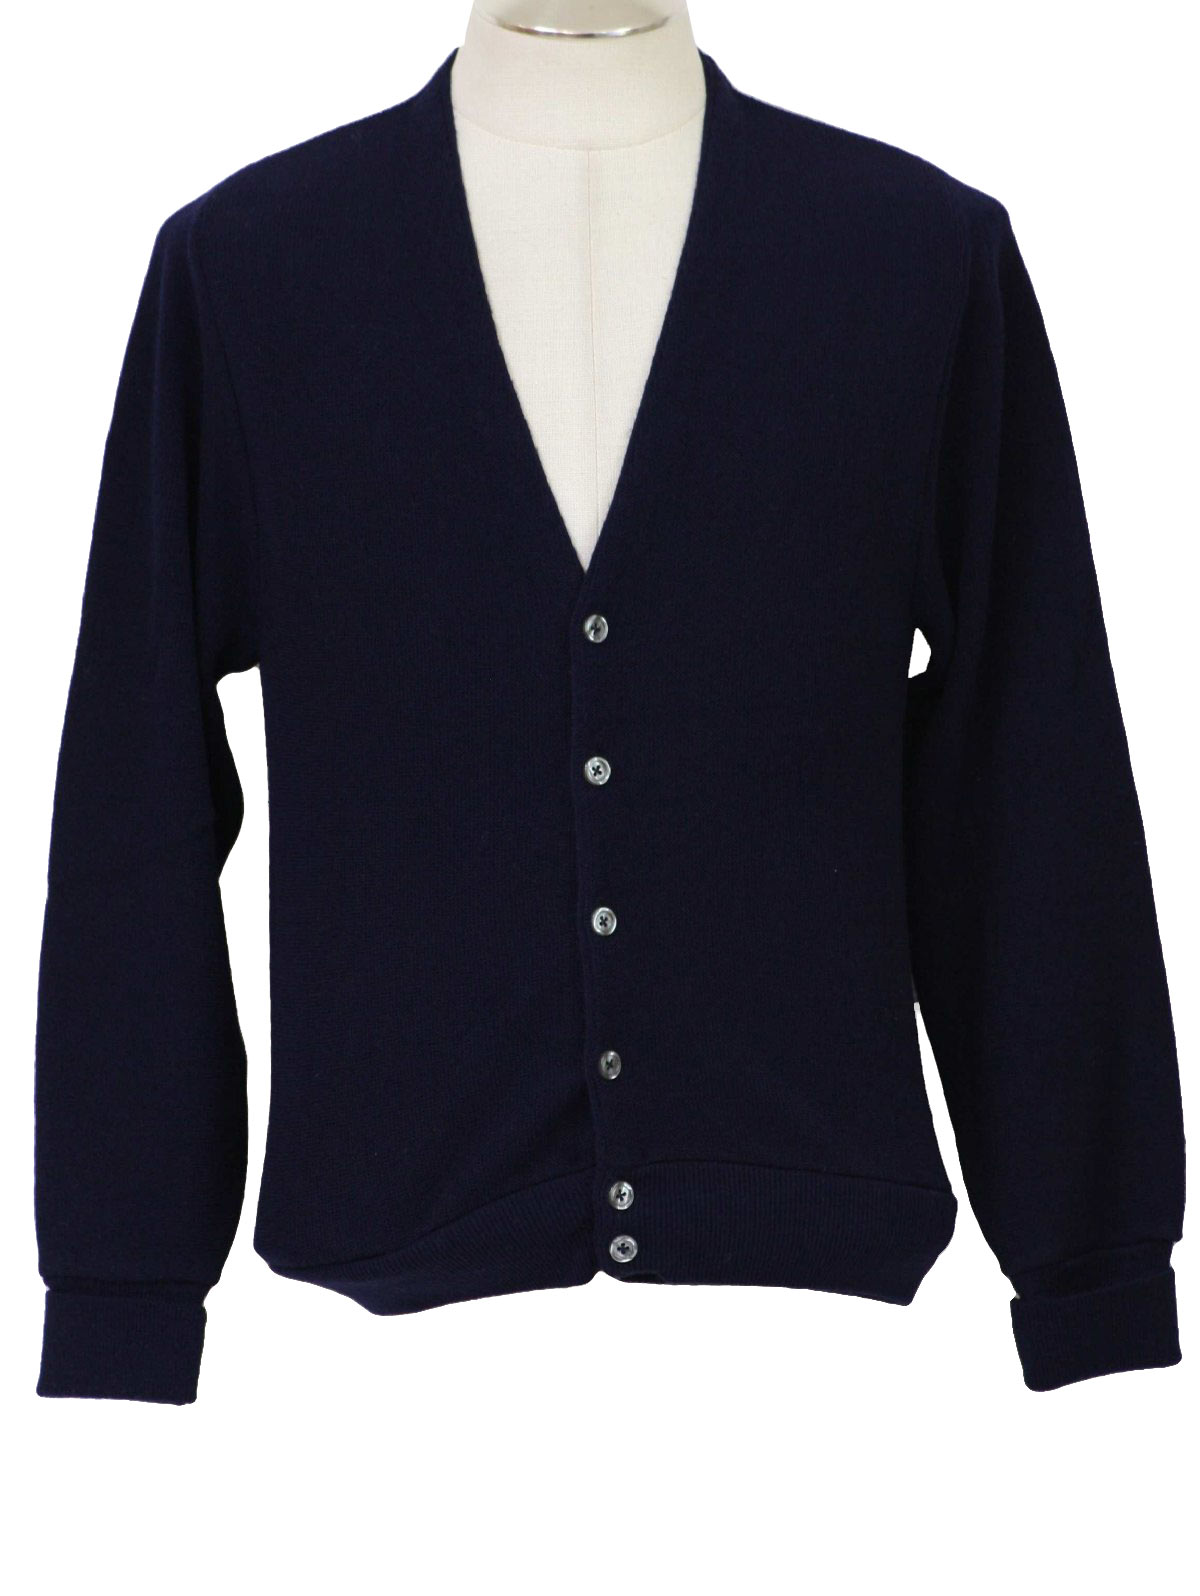 Retro Eighties Caridgan Sweater: 80s -Cypress Links- Mens navy blue ...